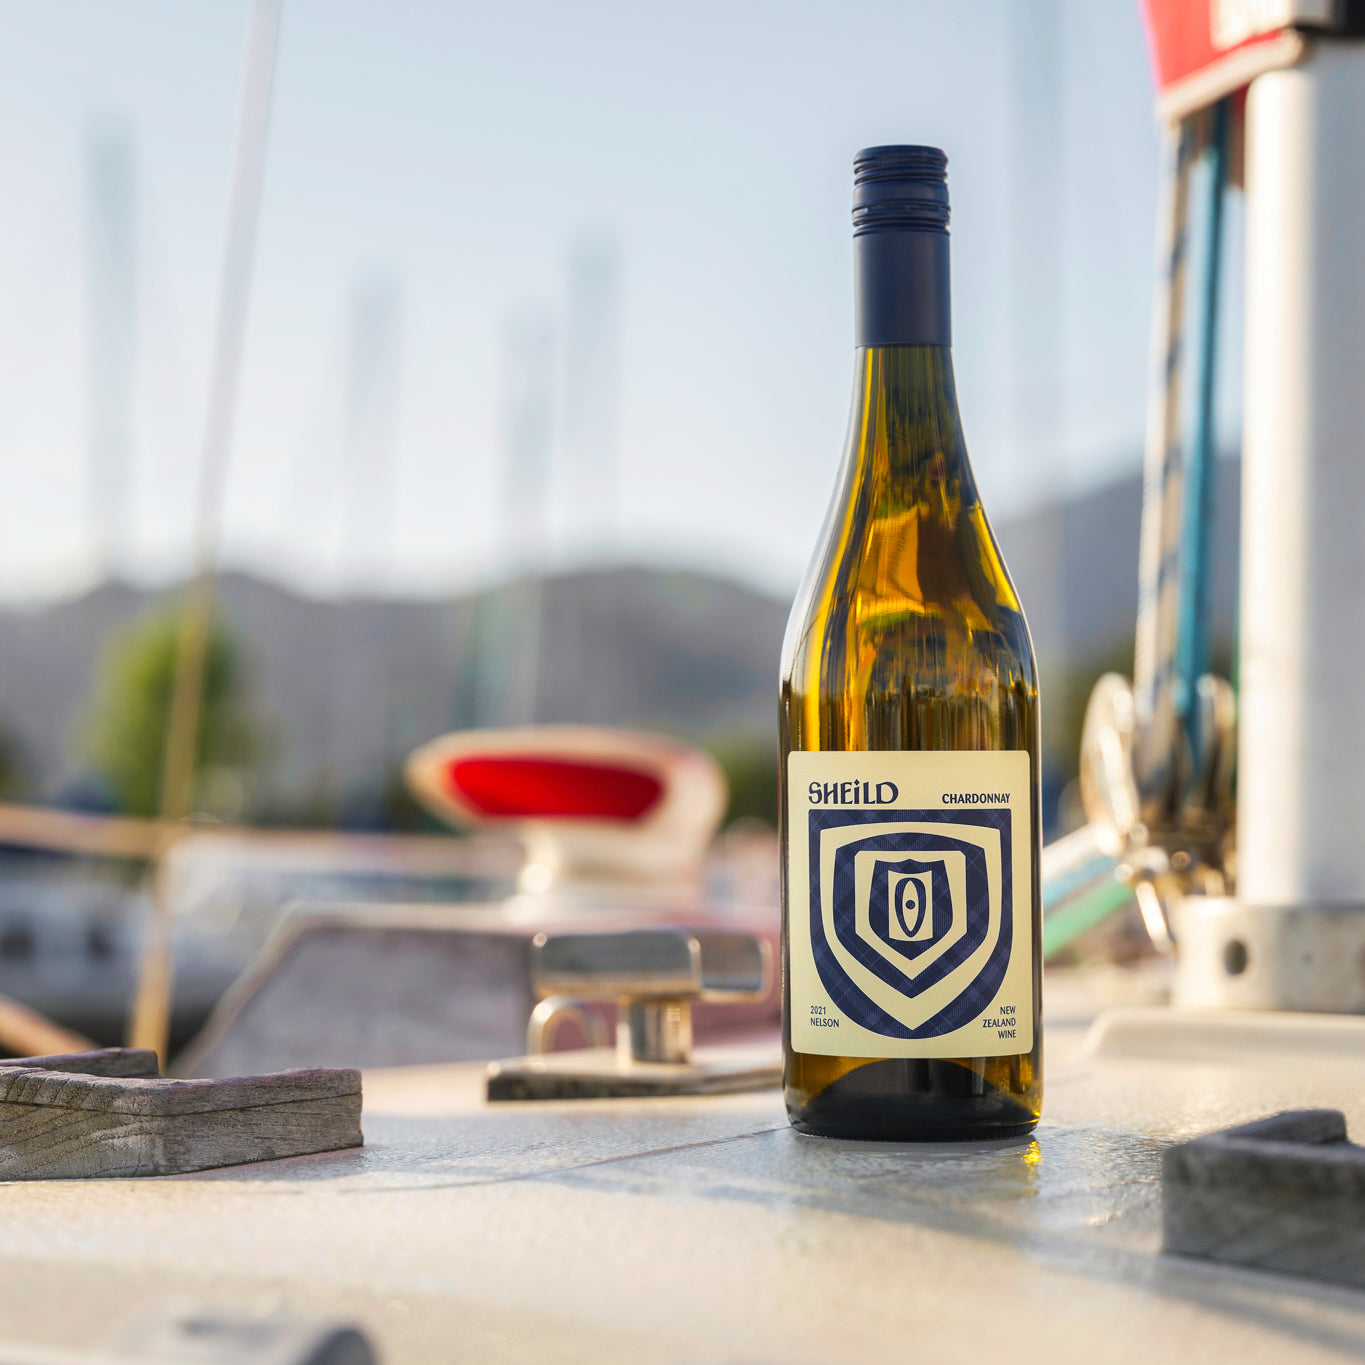 SHEiLD's Chardonnay wine placed on a marina jetty on a sunny day.